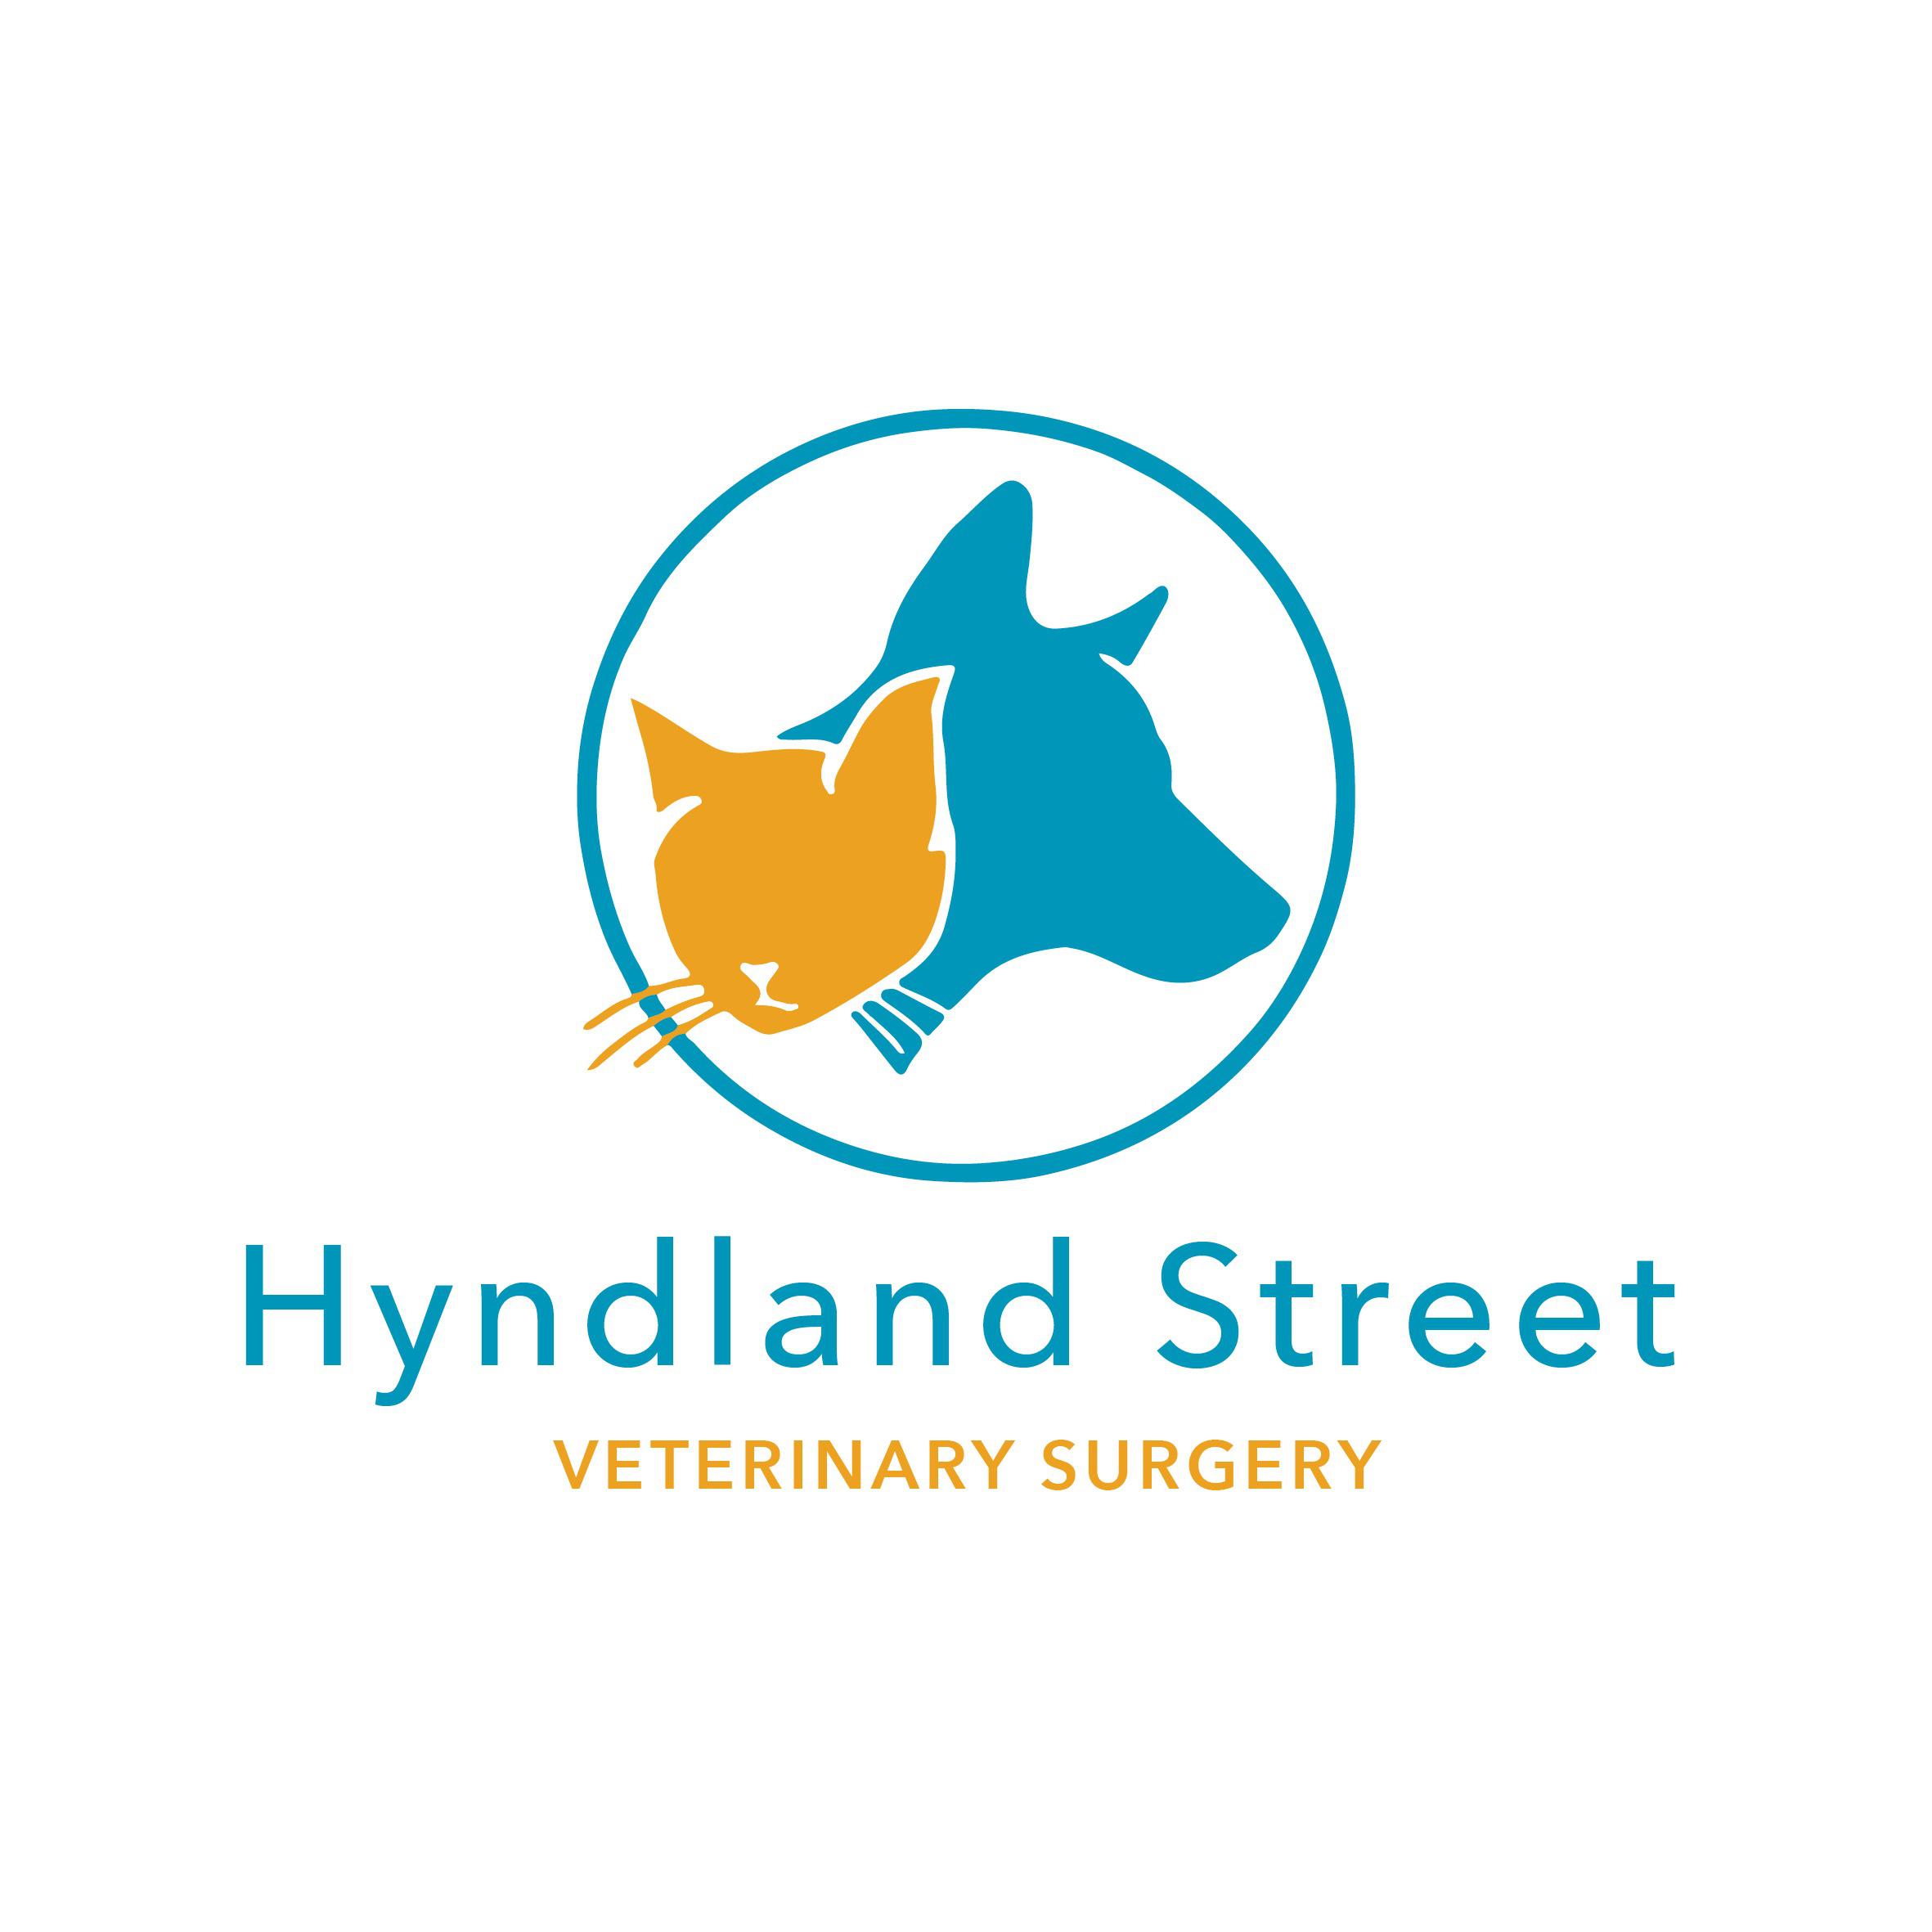 Hyndland Street Veterinary Surgery - Glasgow, Lanarkshire G11 5QF - 01413 573139 | ShowMeLocal.com